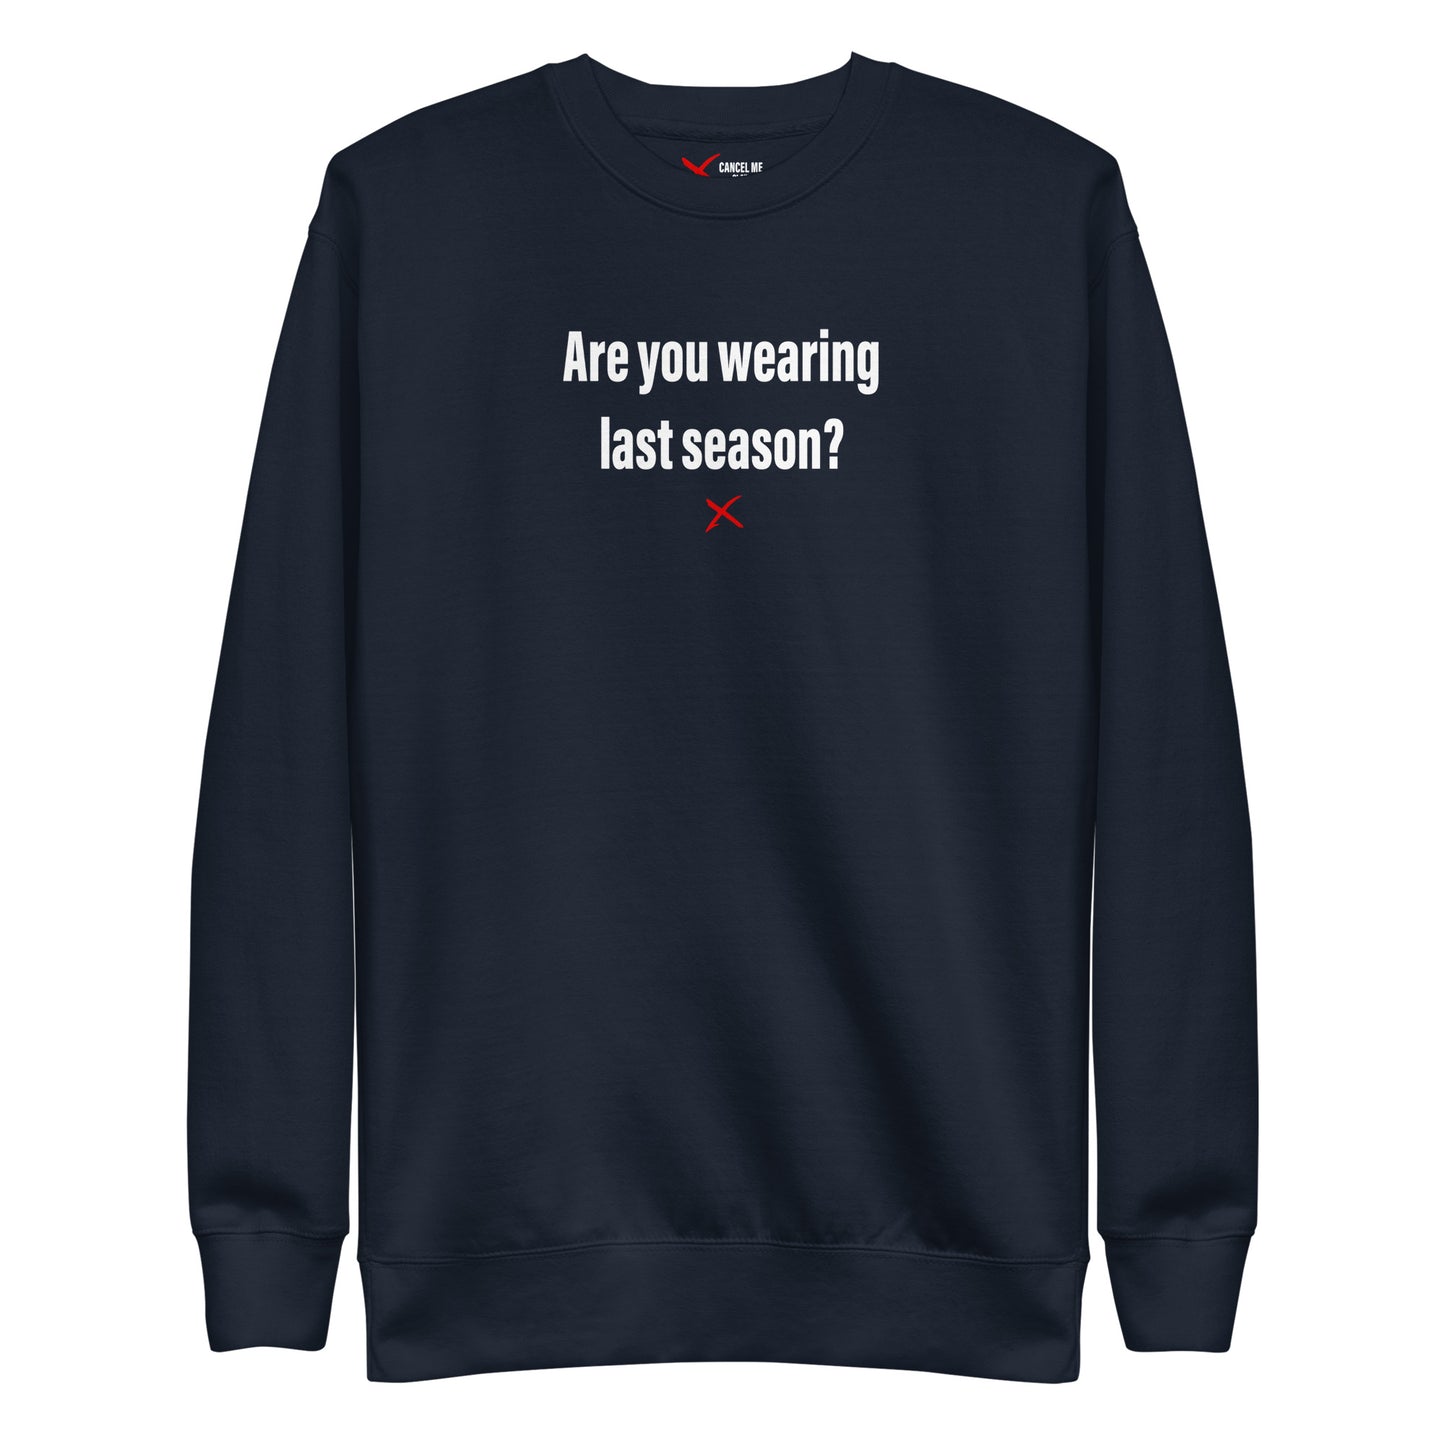 Are you wearing last season? - Sweatshirt